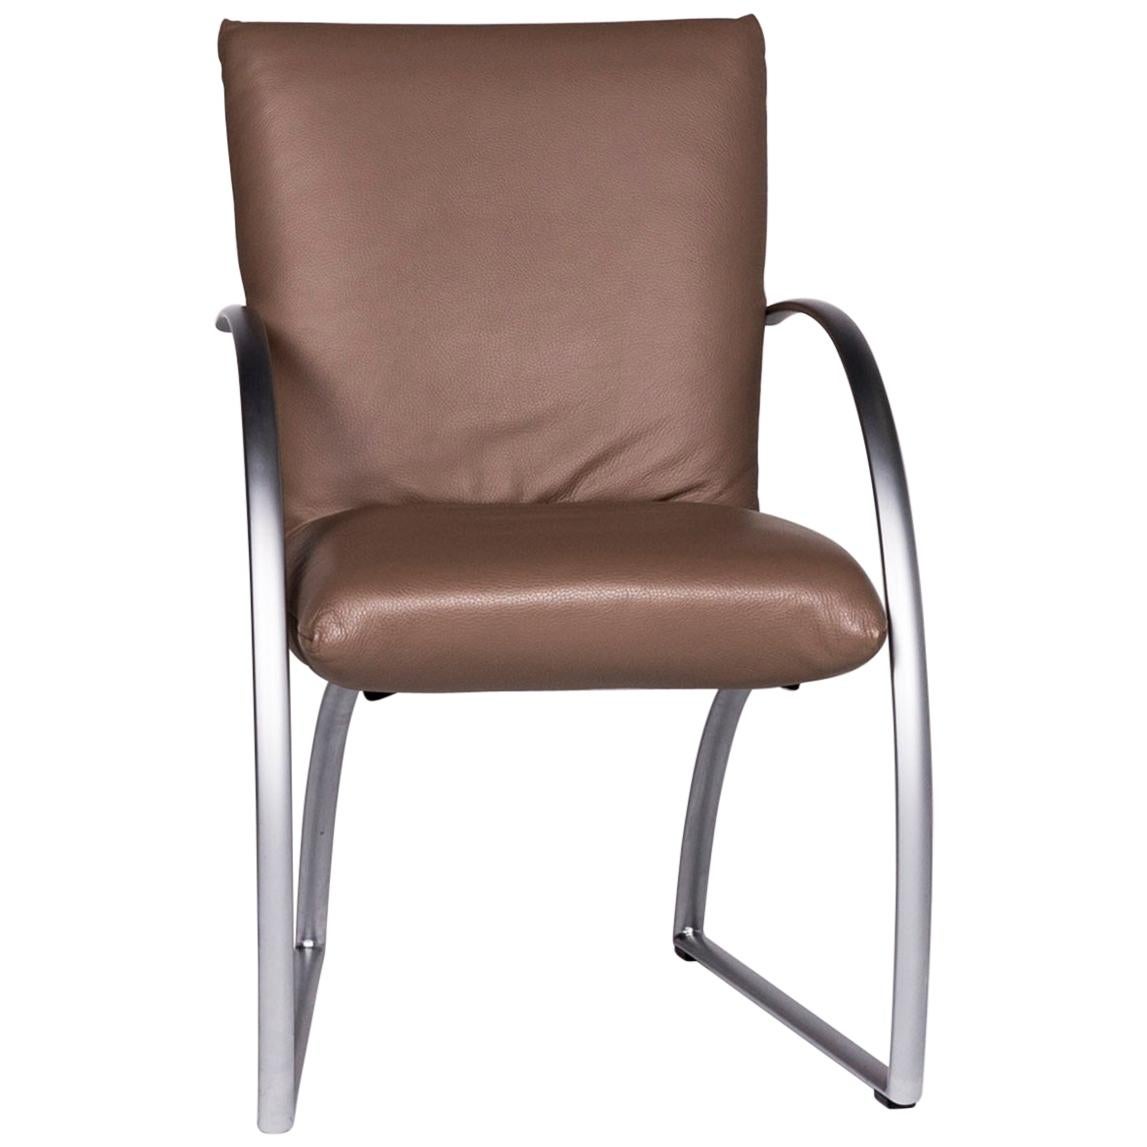 Rolf Benz 7600 Leather Chrome Armchair Brown Chair